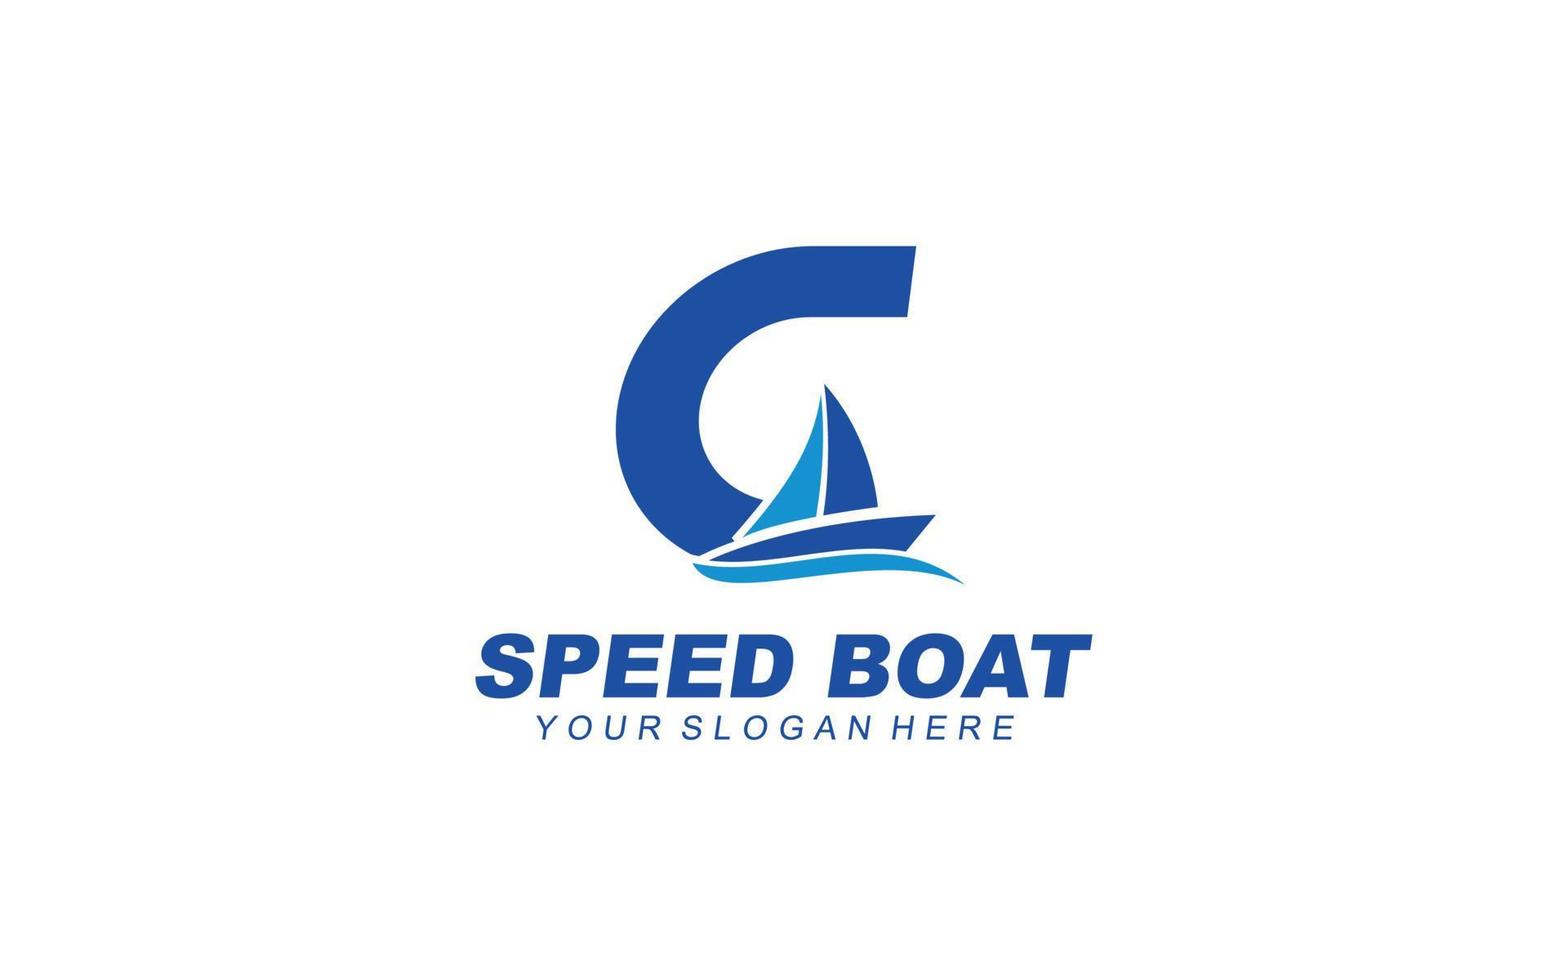 C Boat logo design inspiration. Vector letter template design for brand.